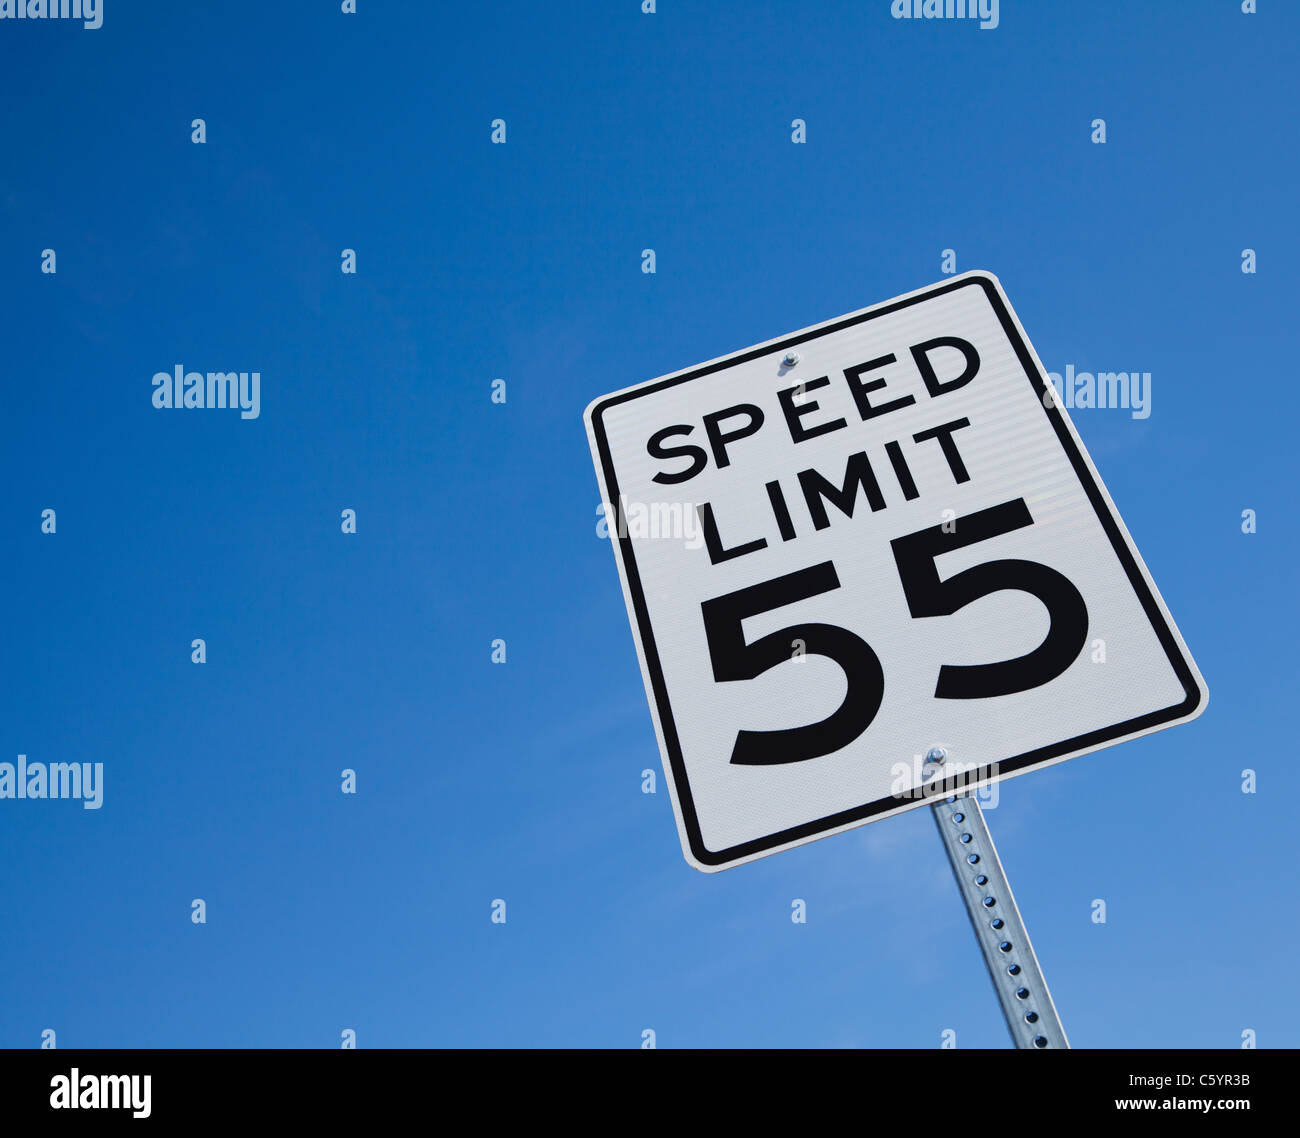 USA, Arizona, Speed limit sign Stock Photo